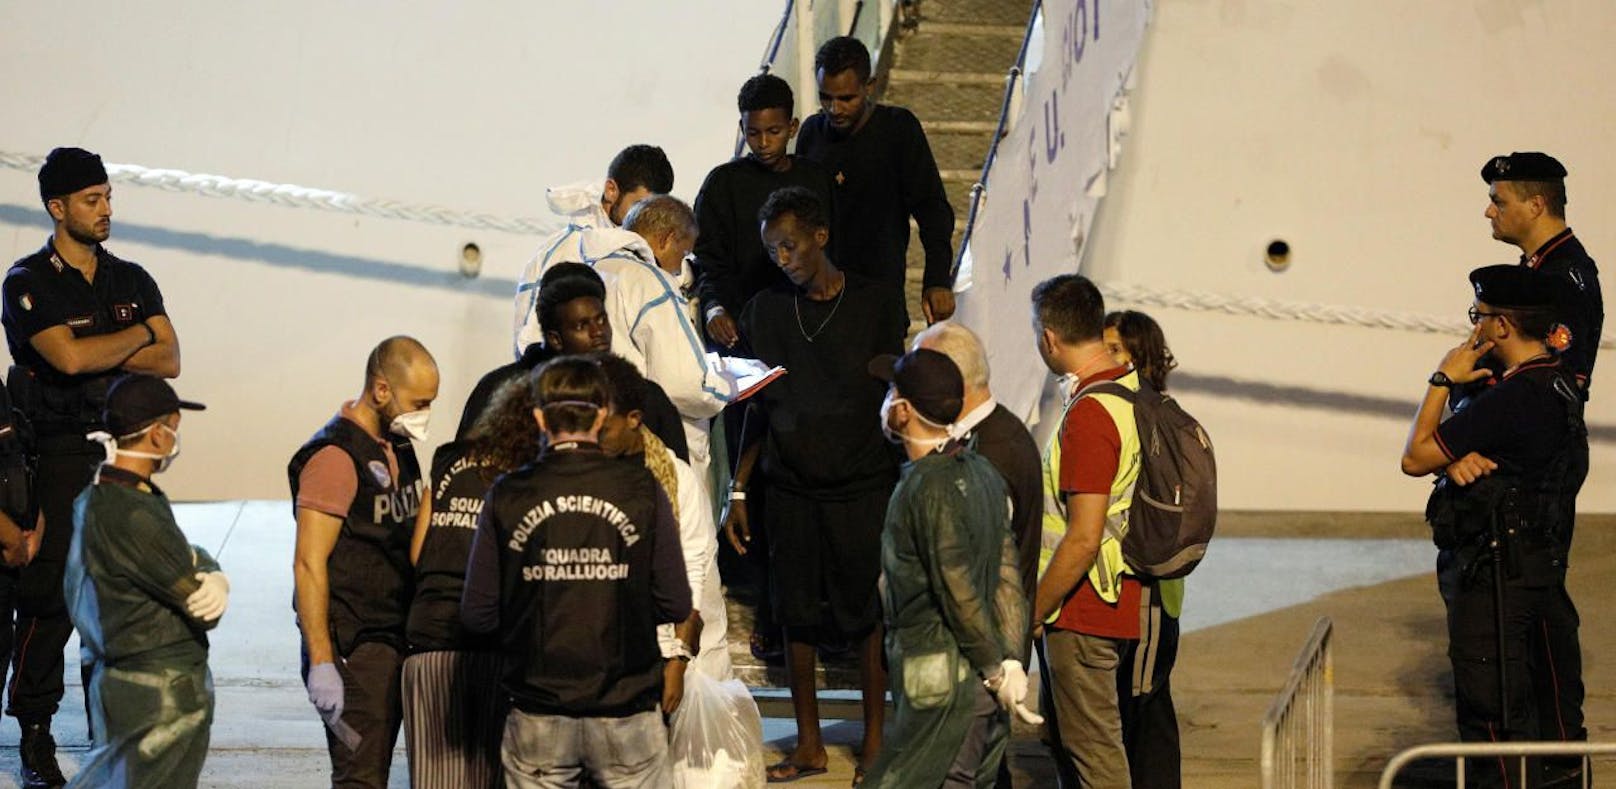 Tuberkulose-Alarm! Flüchtlingsschiff evakuiert